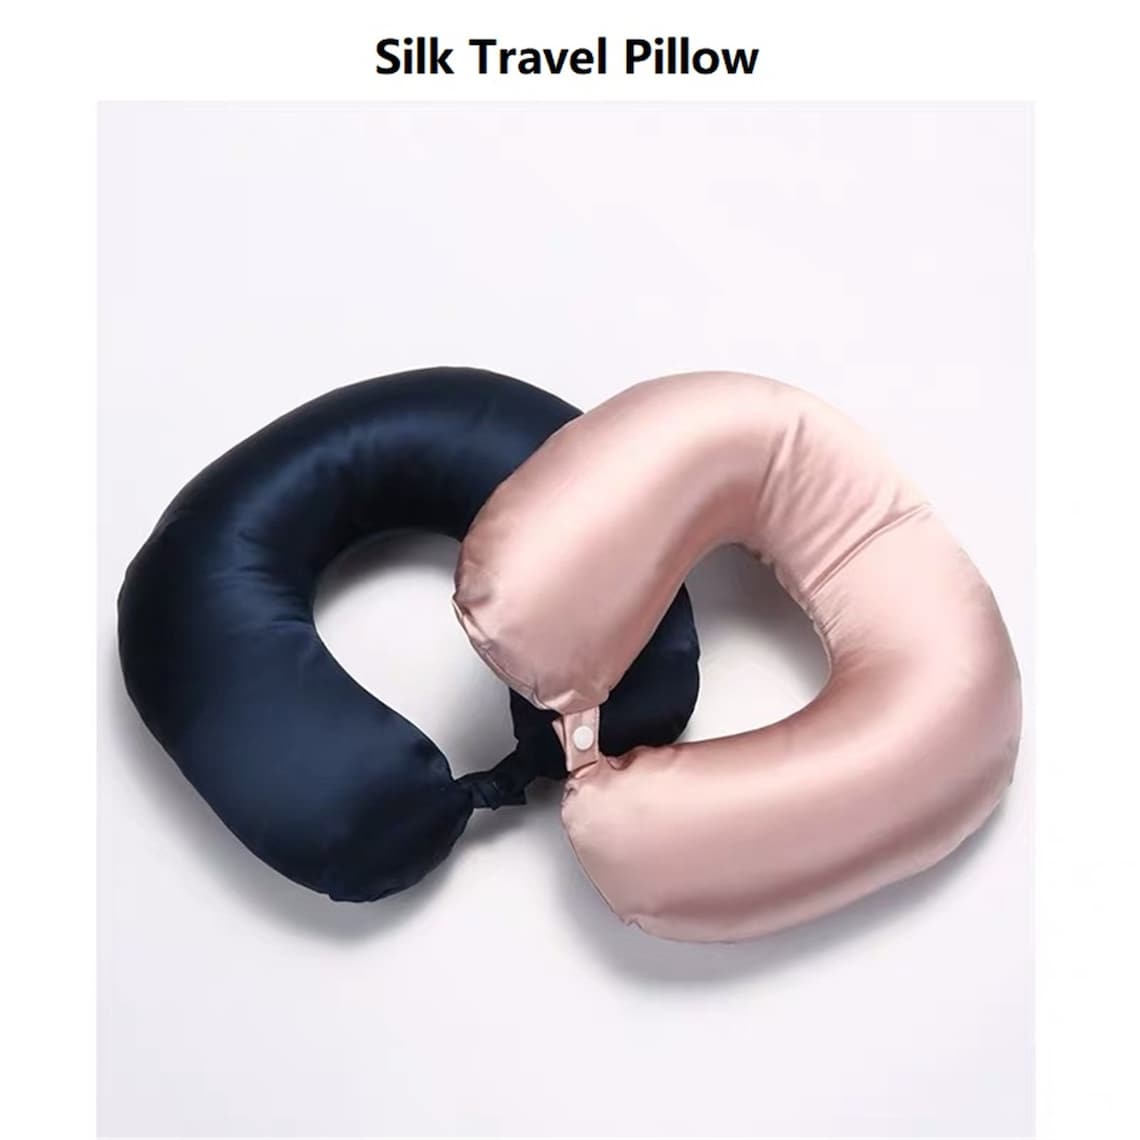 silk travel pillow uk